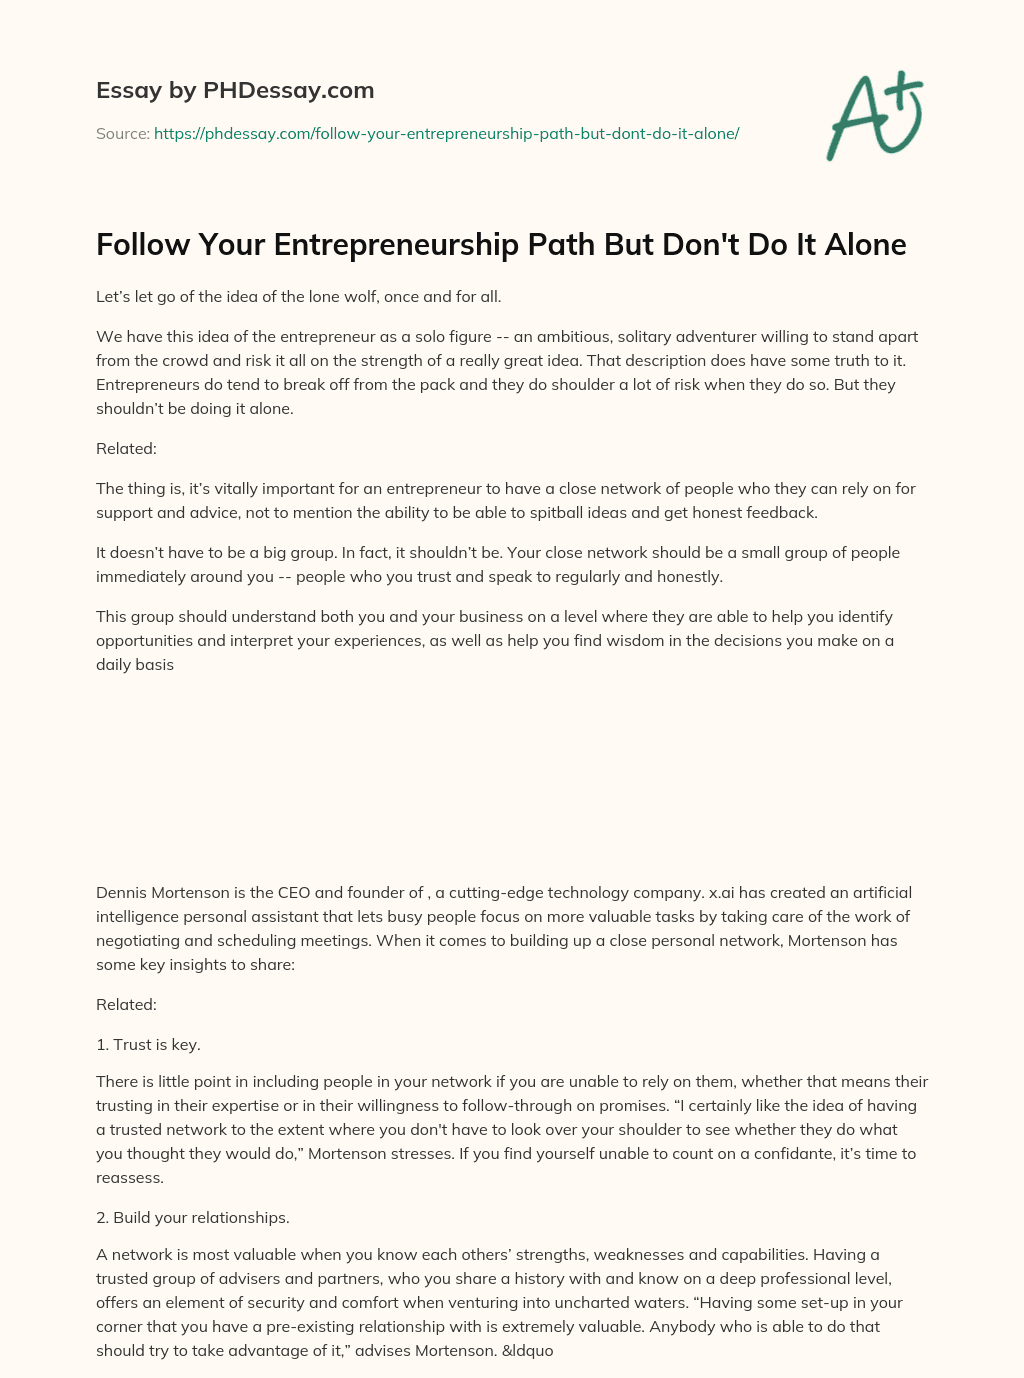 Follow Your Entrepreneurship Path But Don’t Do It Alone essay